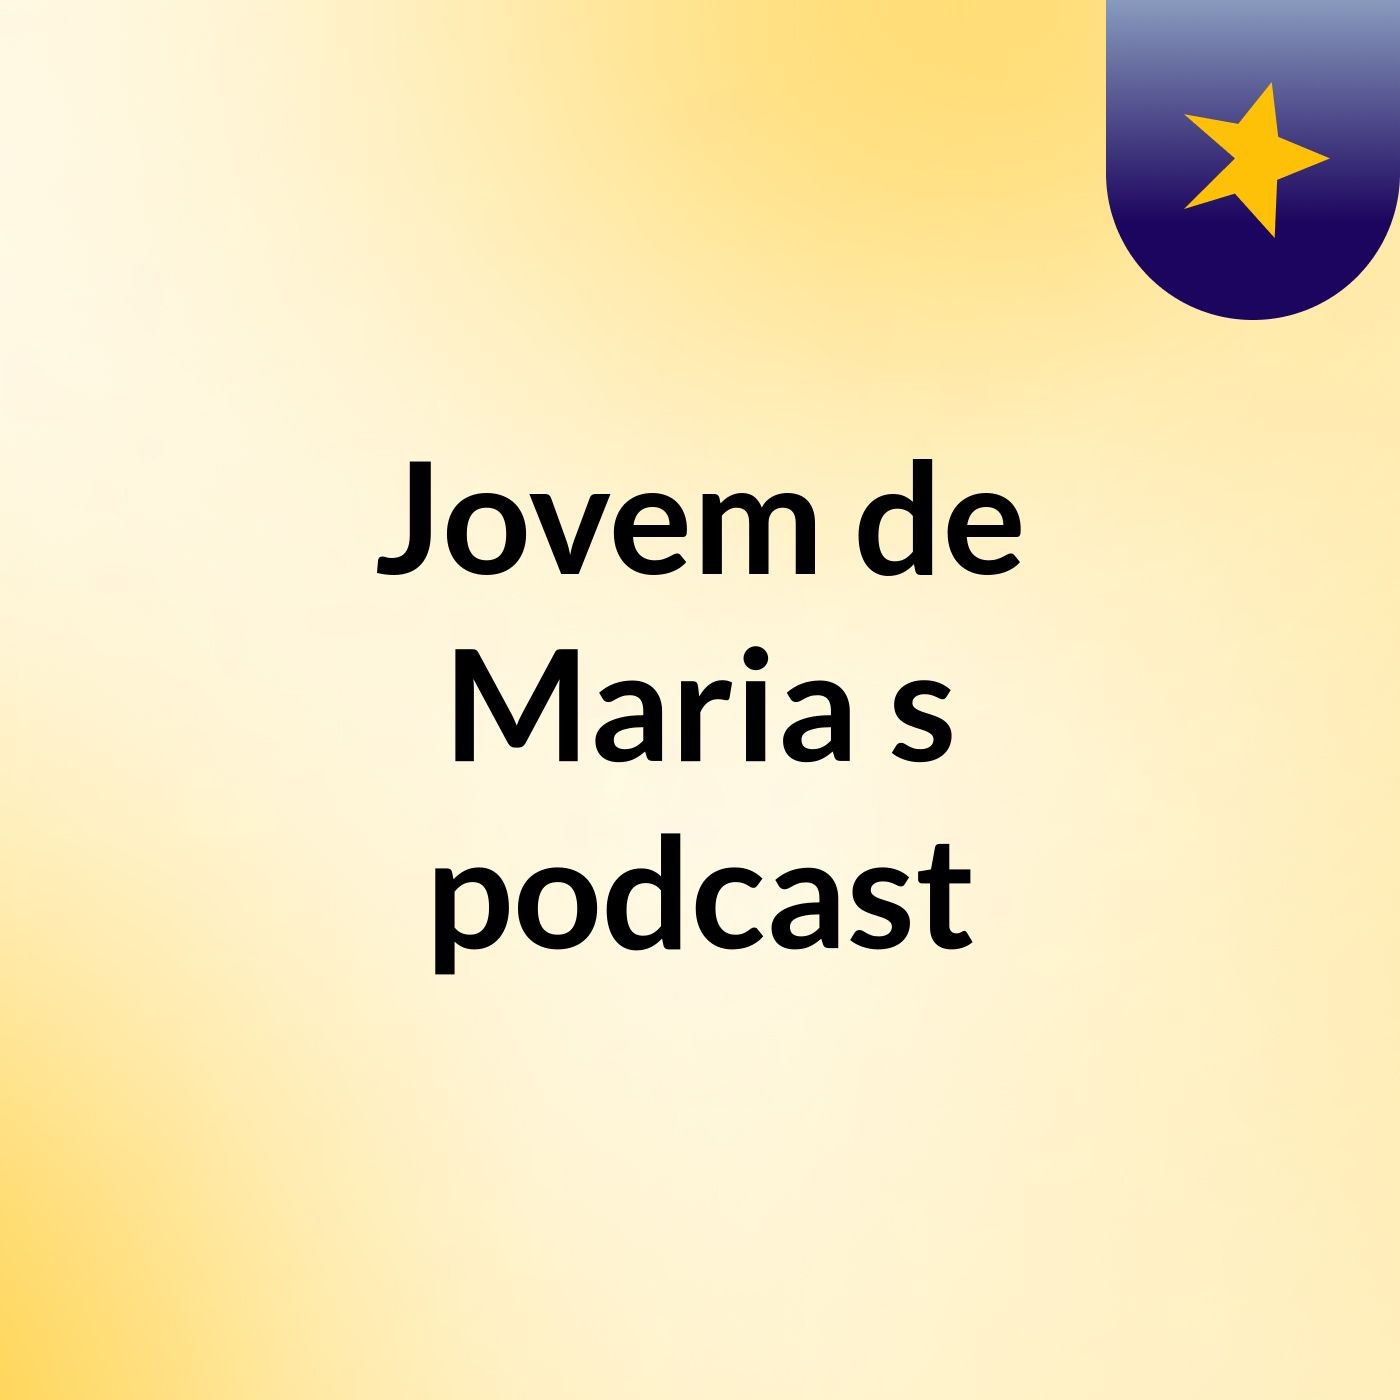 Jovem de Maria's podcast